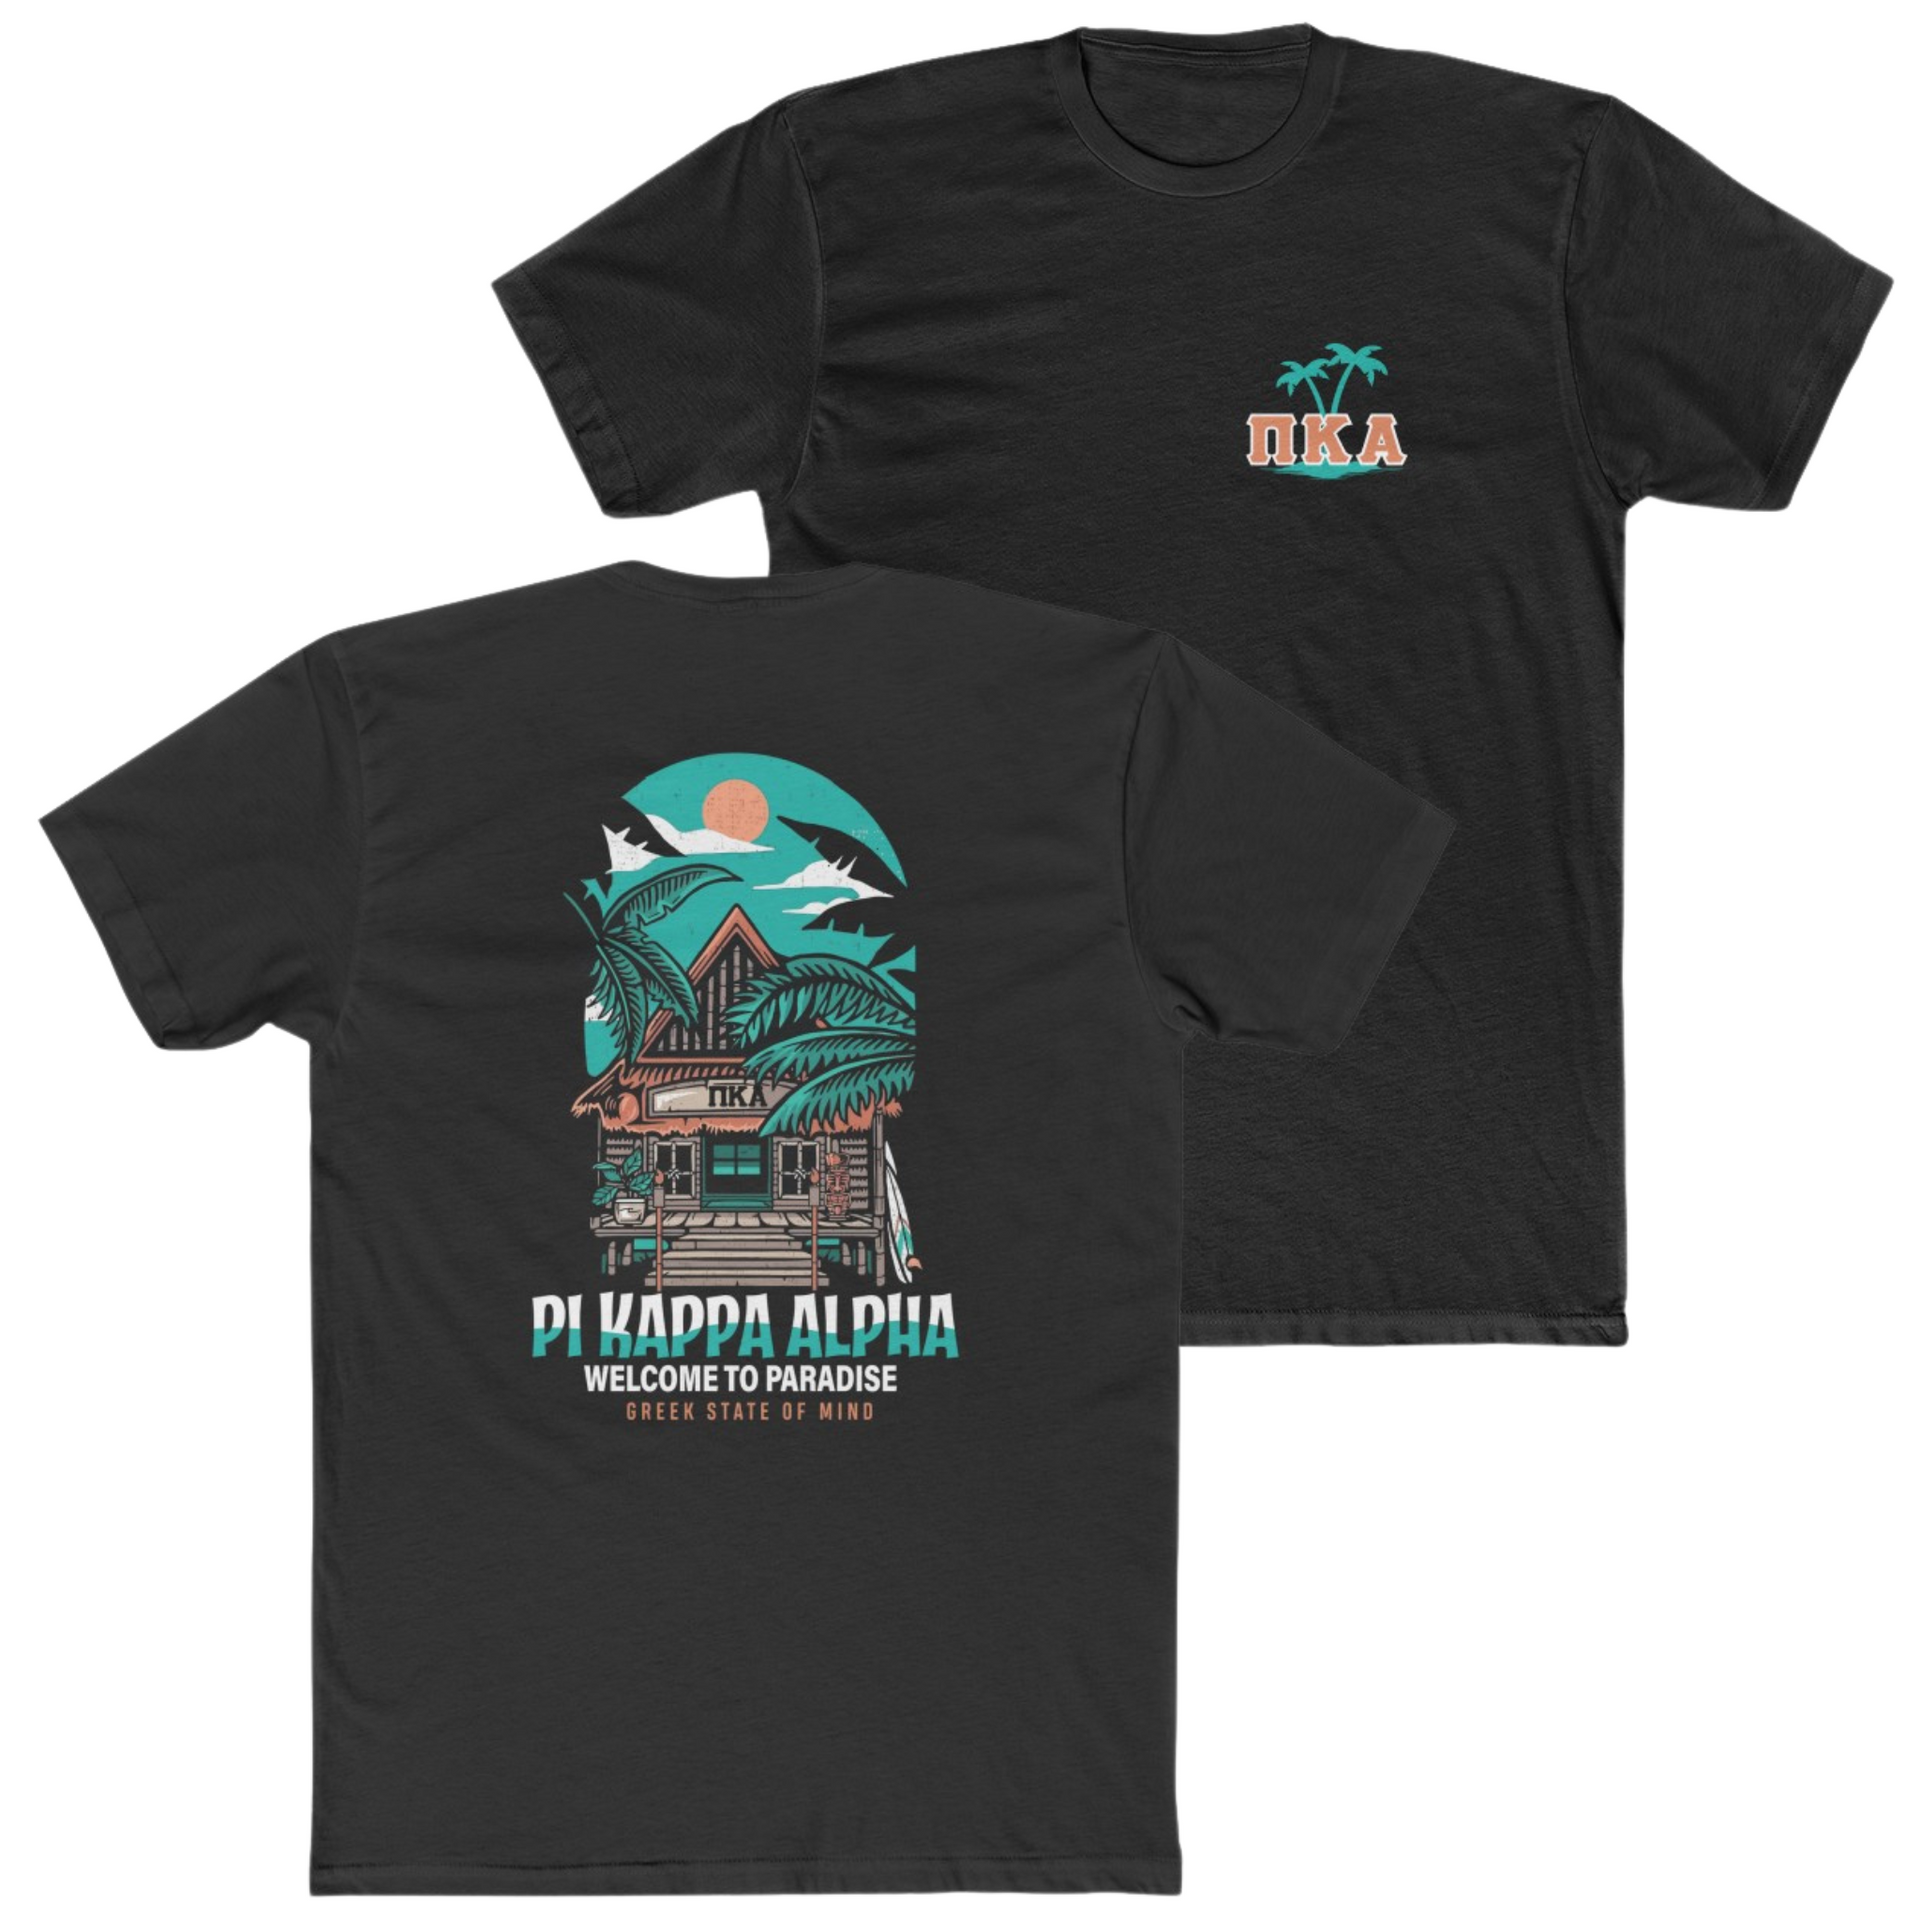 Black Pi Kappa Alpha Graphic T-Shirt | Welcome to Paradise | Pi kappa alpha fraternity shirt 